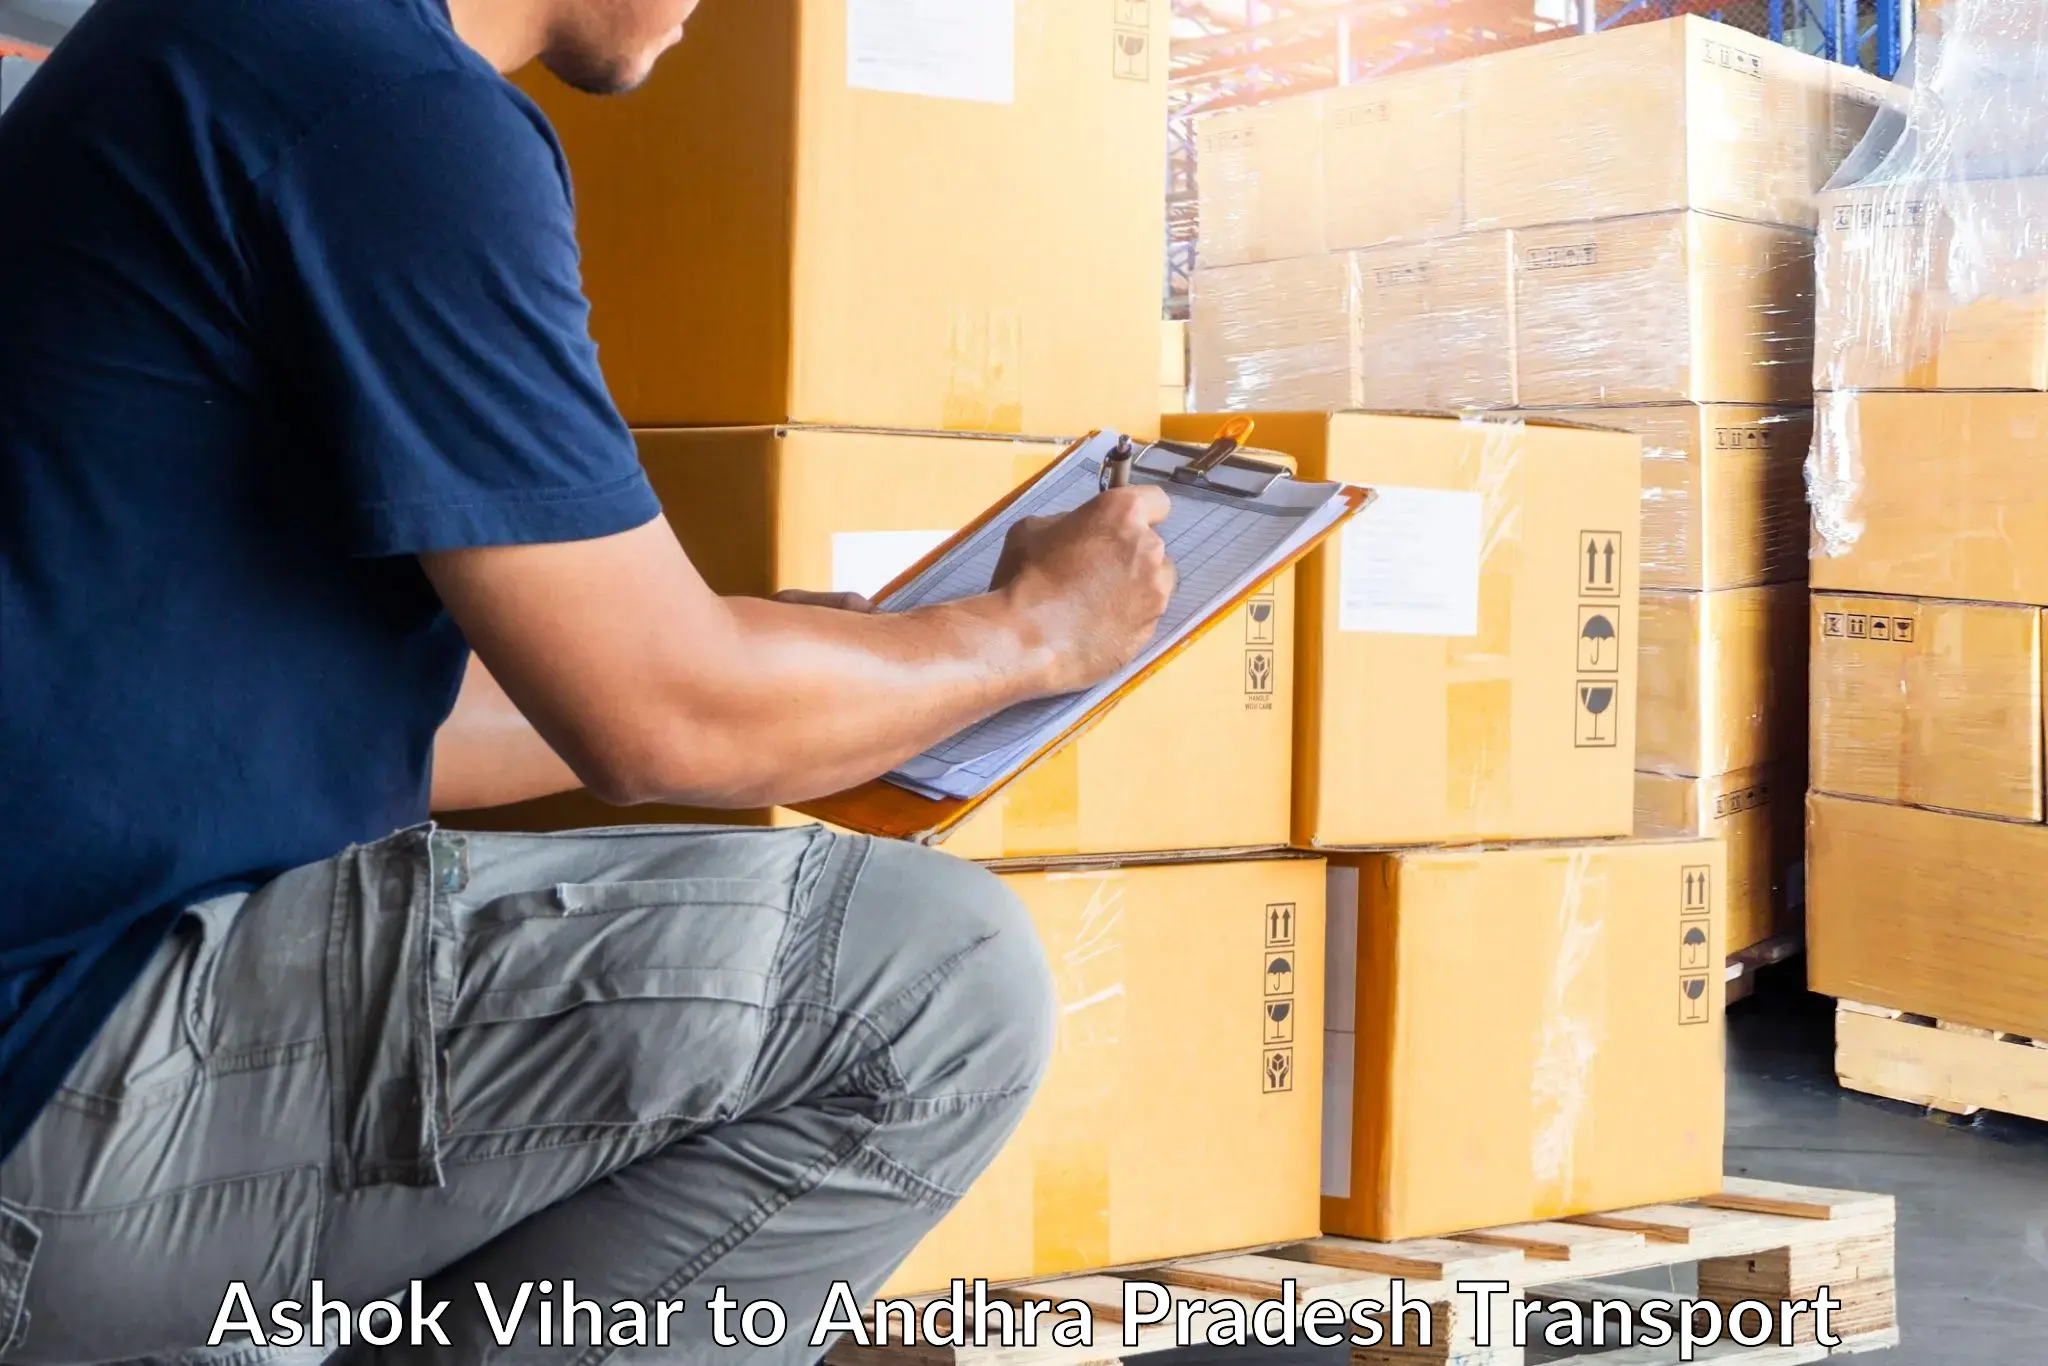 Delivery service Ashok Vihar to Tirupati